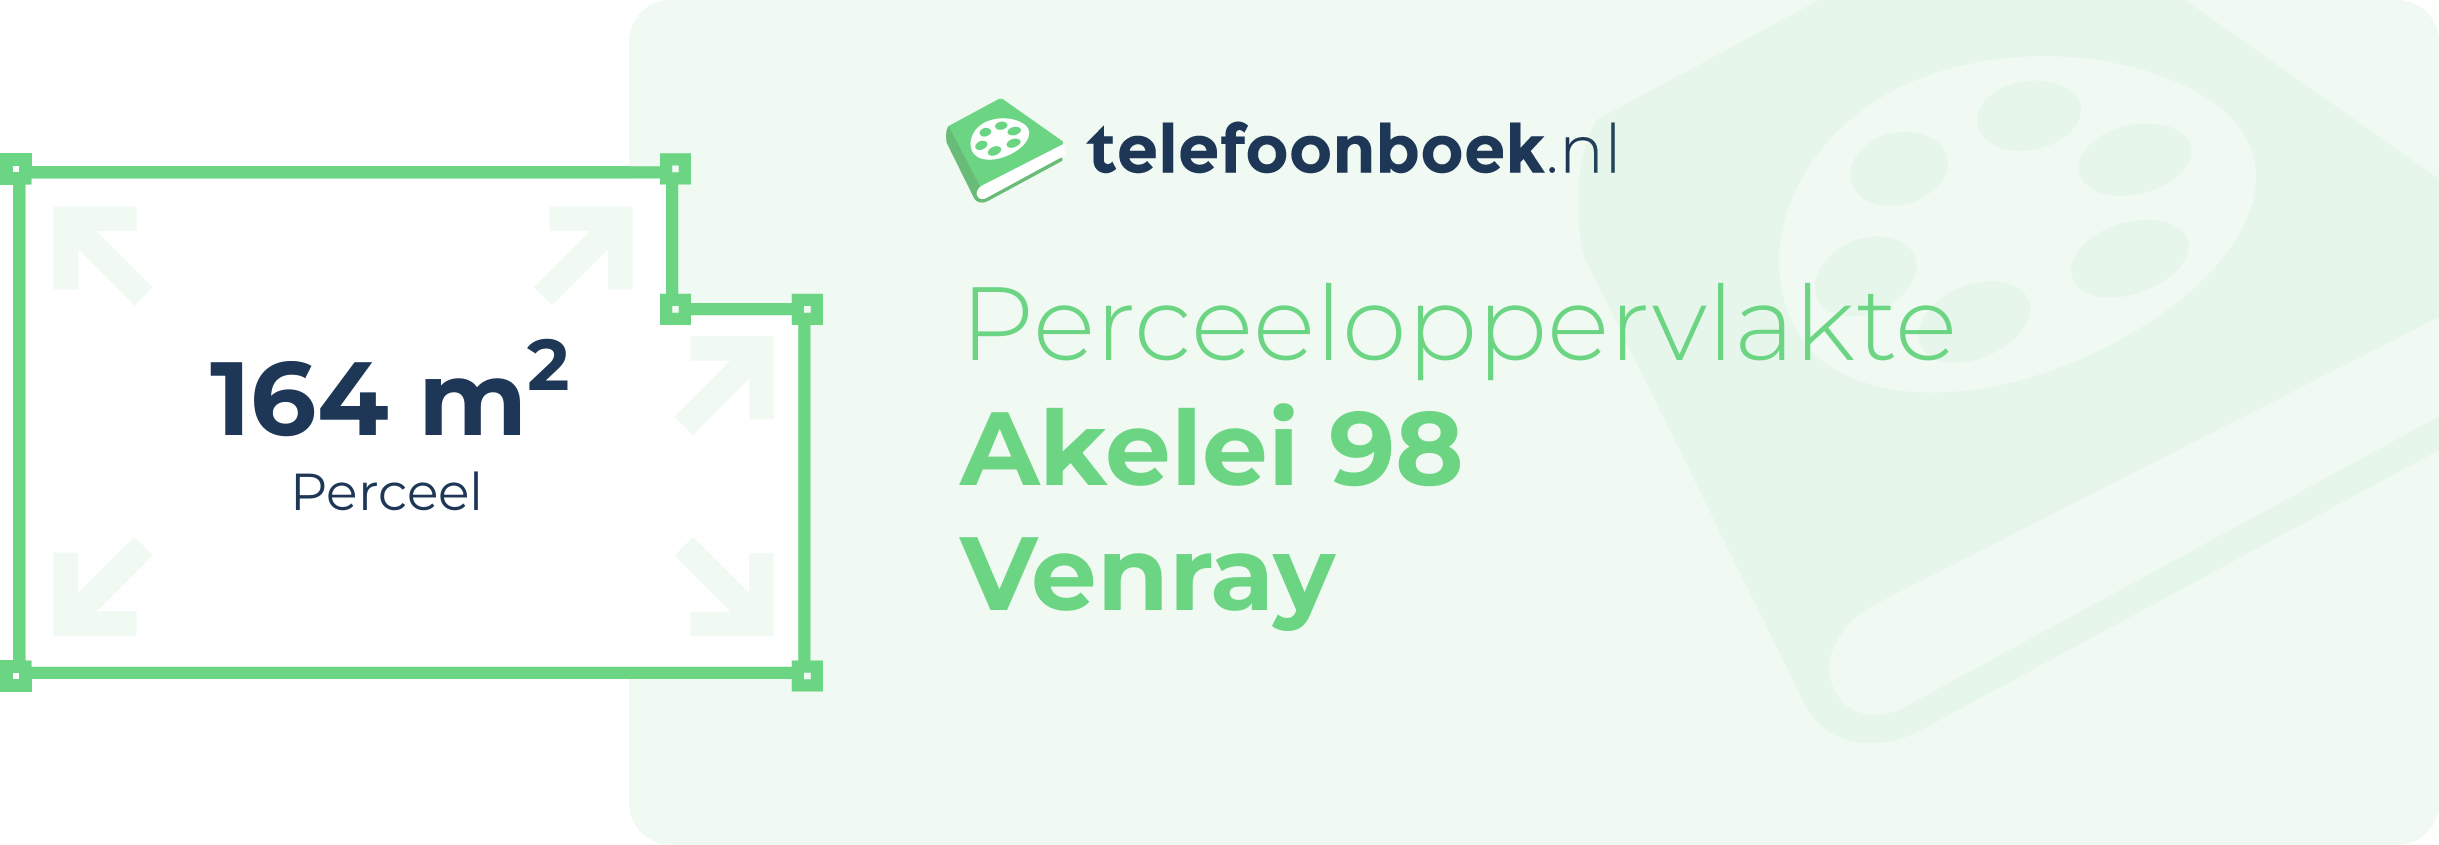 Perceeloppervlakte Akelei 98 Venray